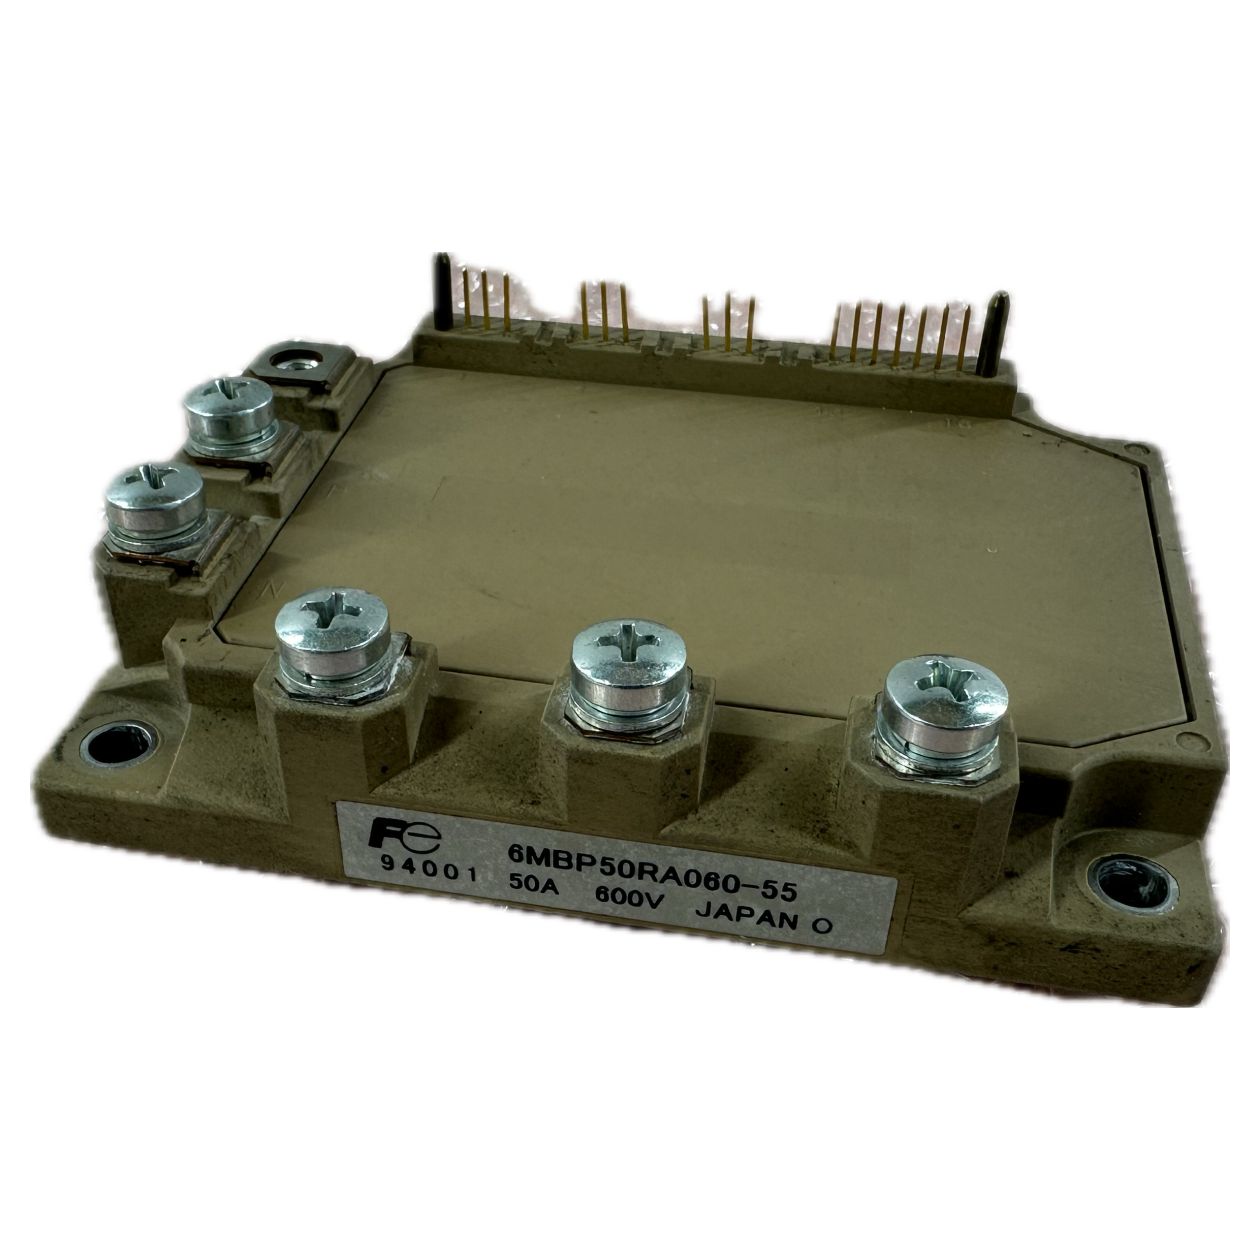 LK2794 Insulated gate bipolar transistor IGBT Fuji 6MBP50RA060-55 50A 600V